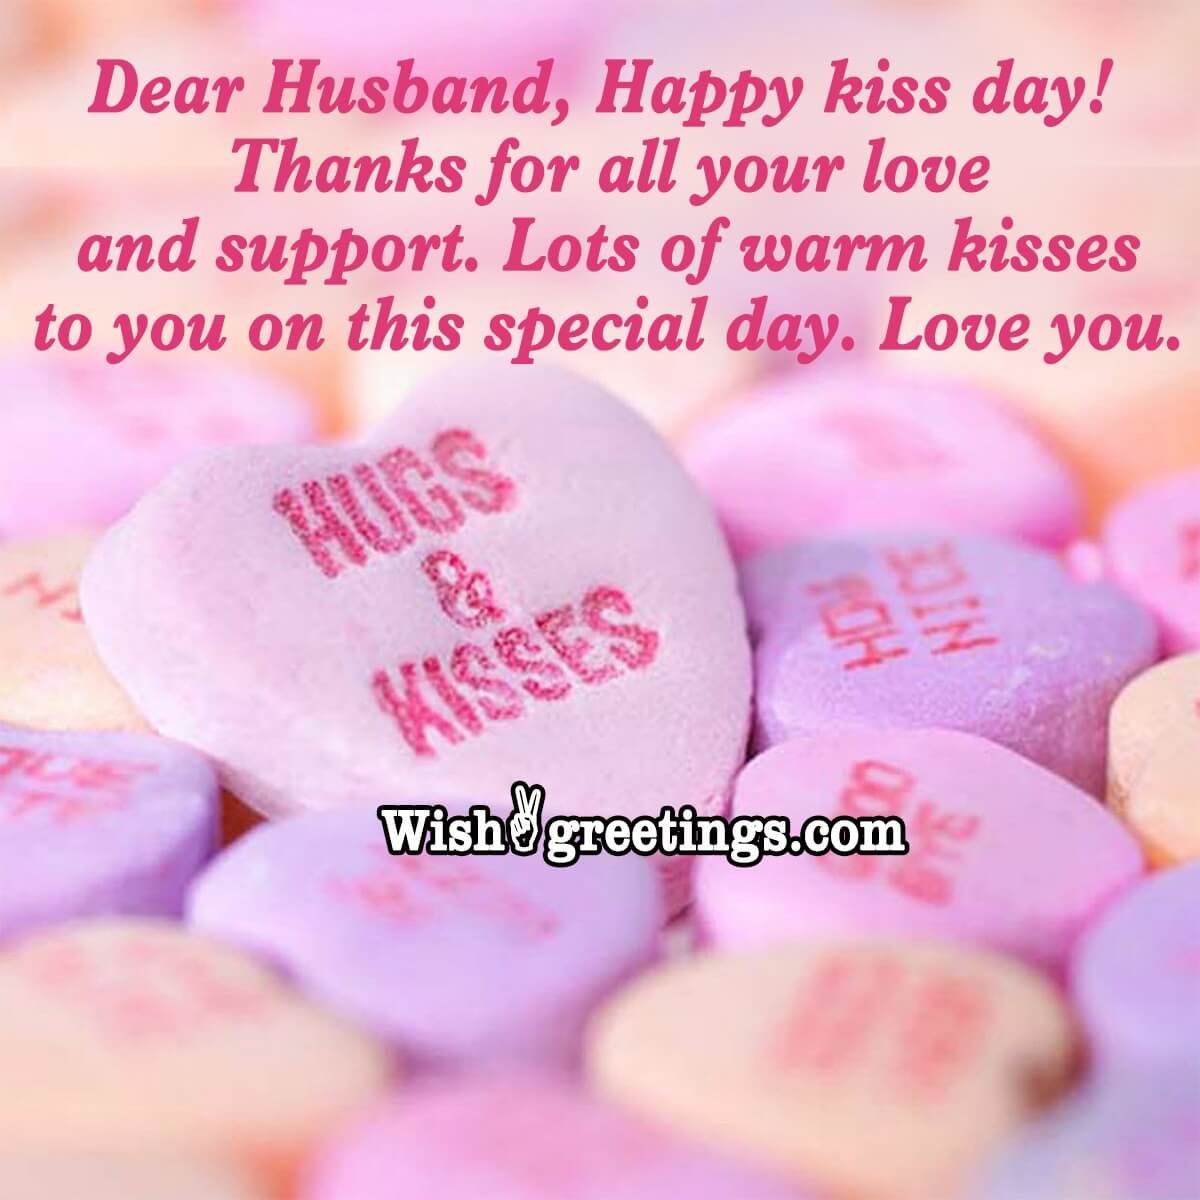 Dear Husband, Happy Kiss Day!